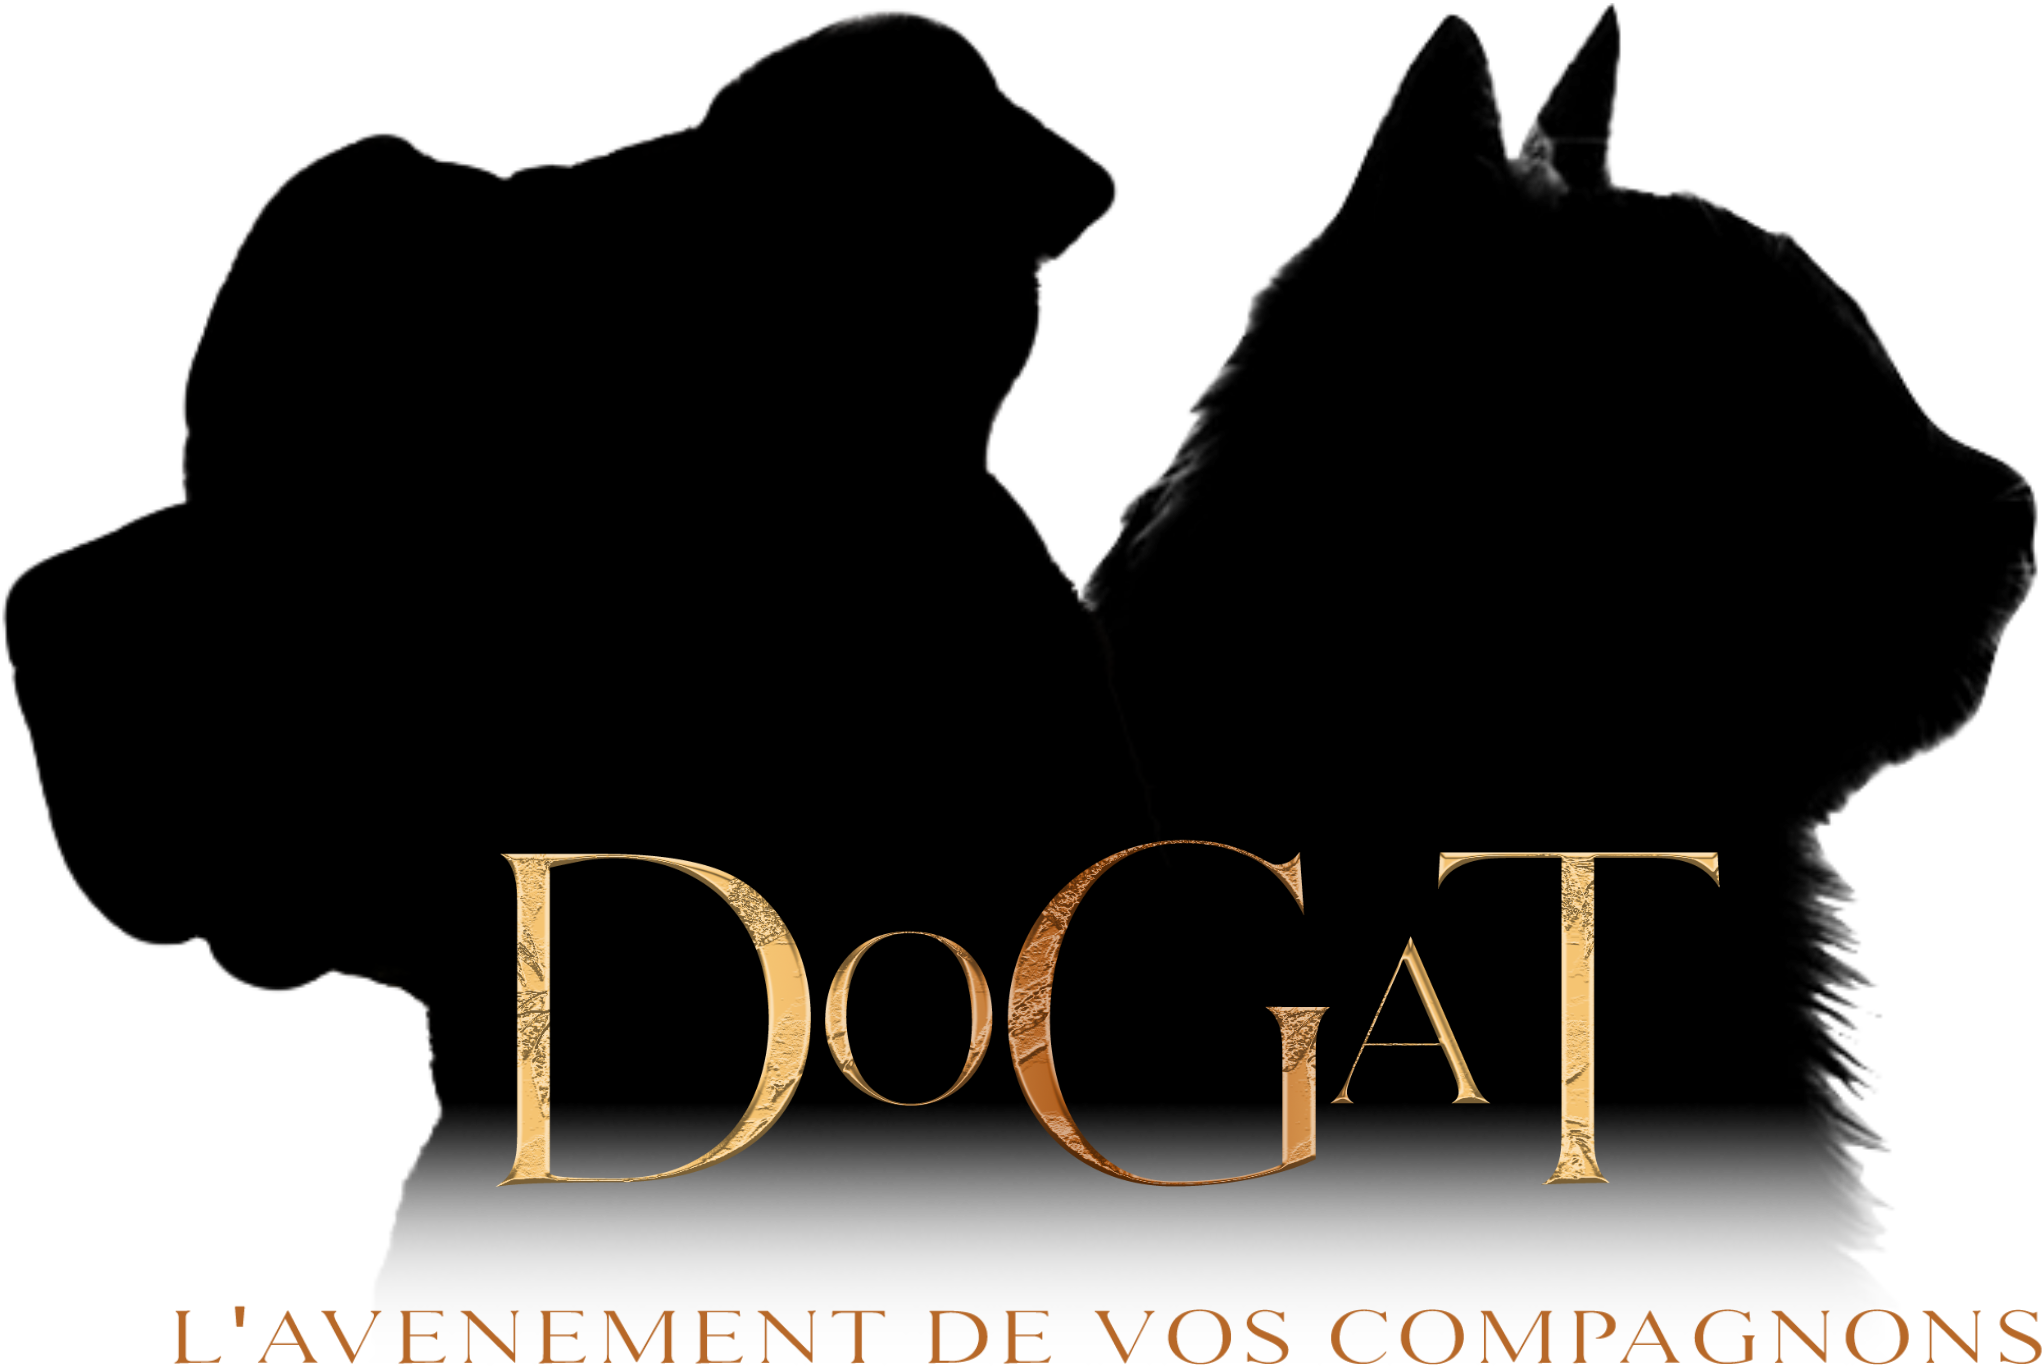 DOGAT-logo